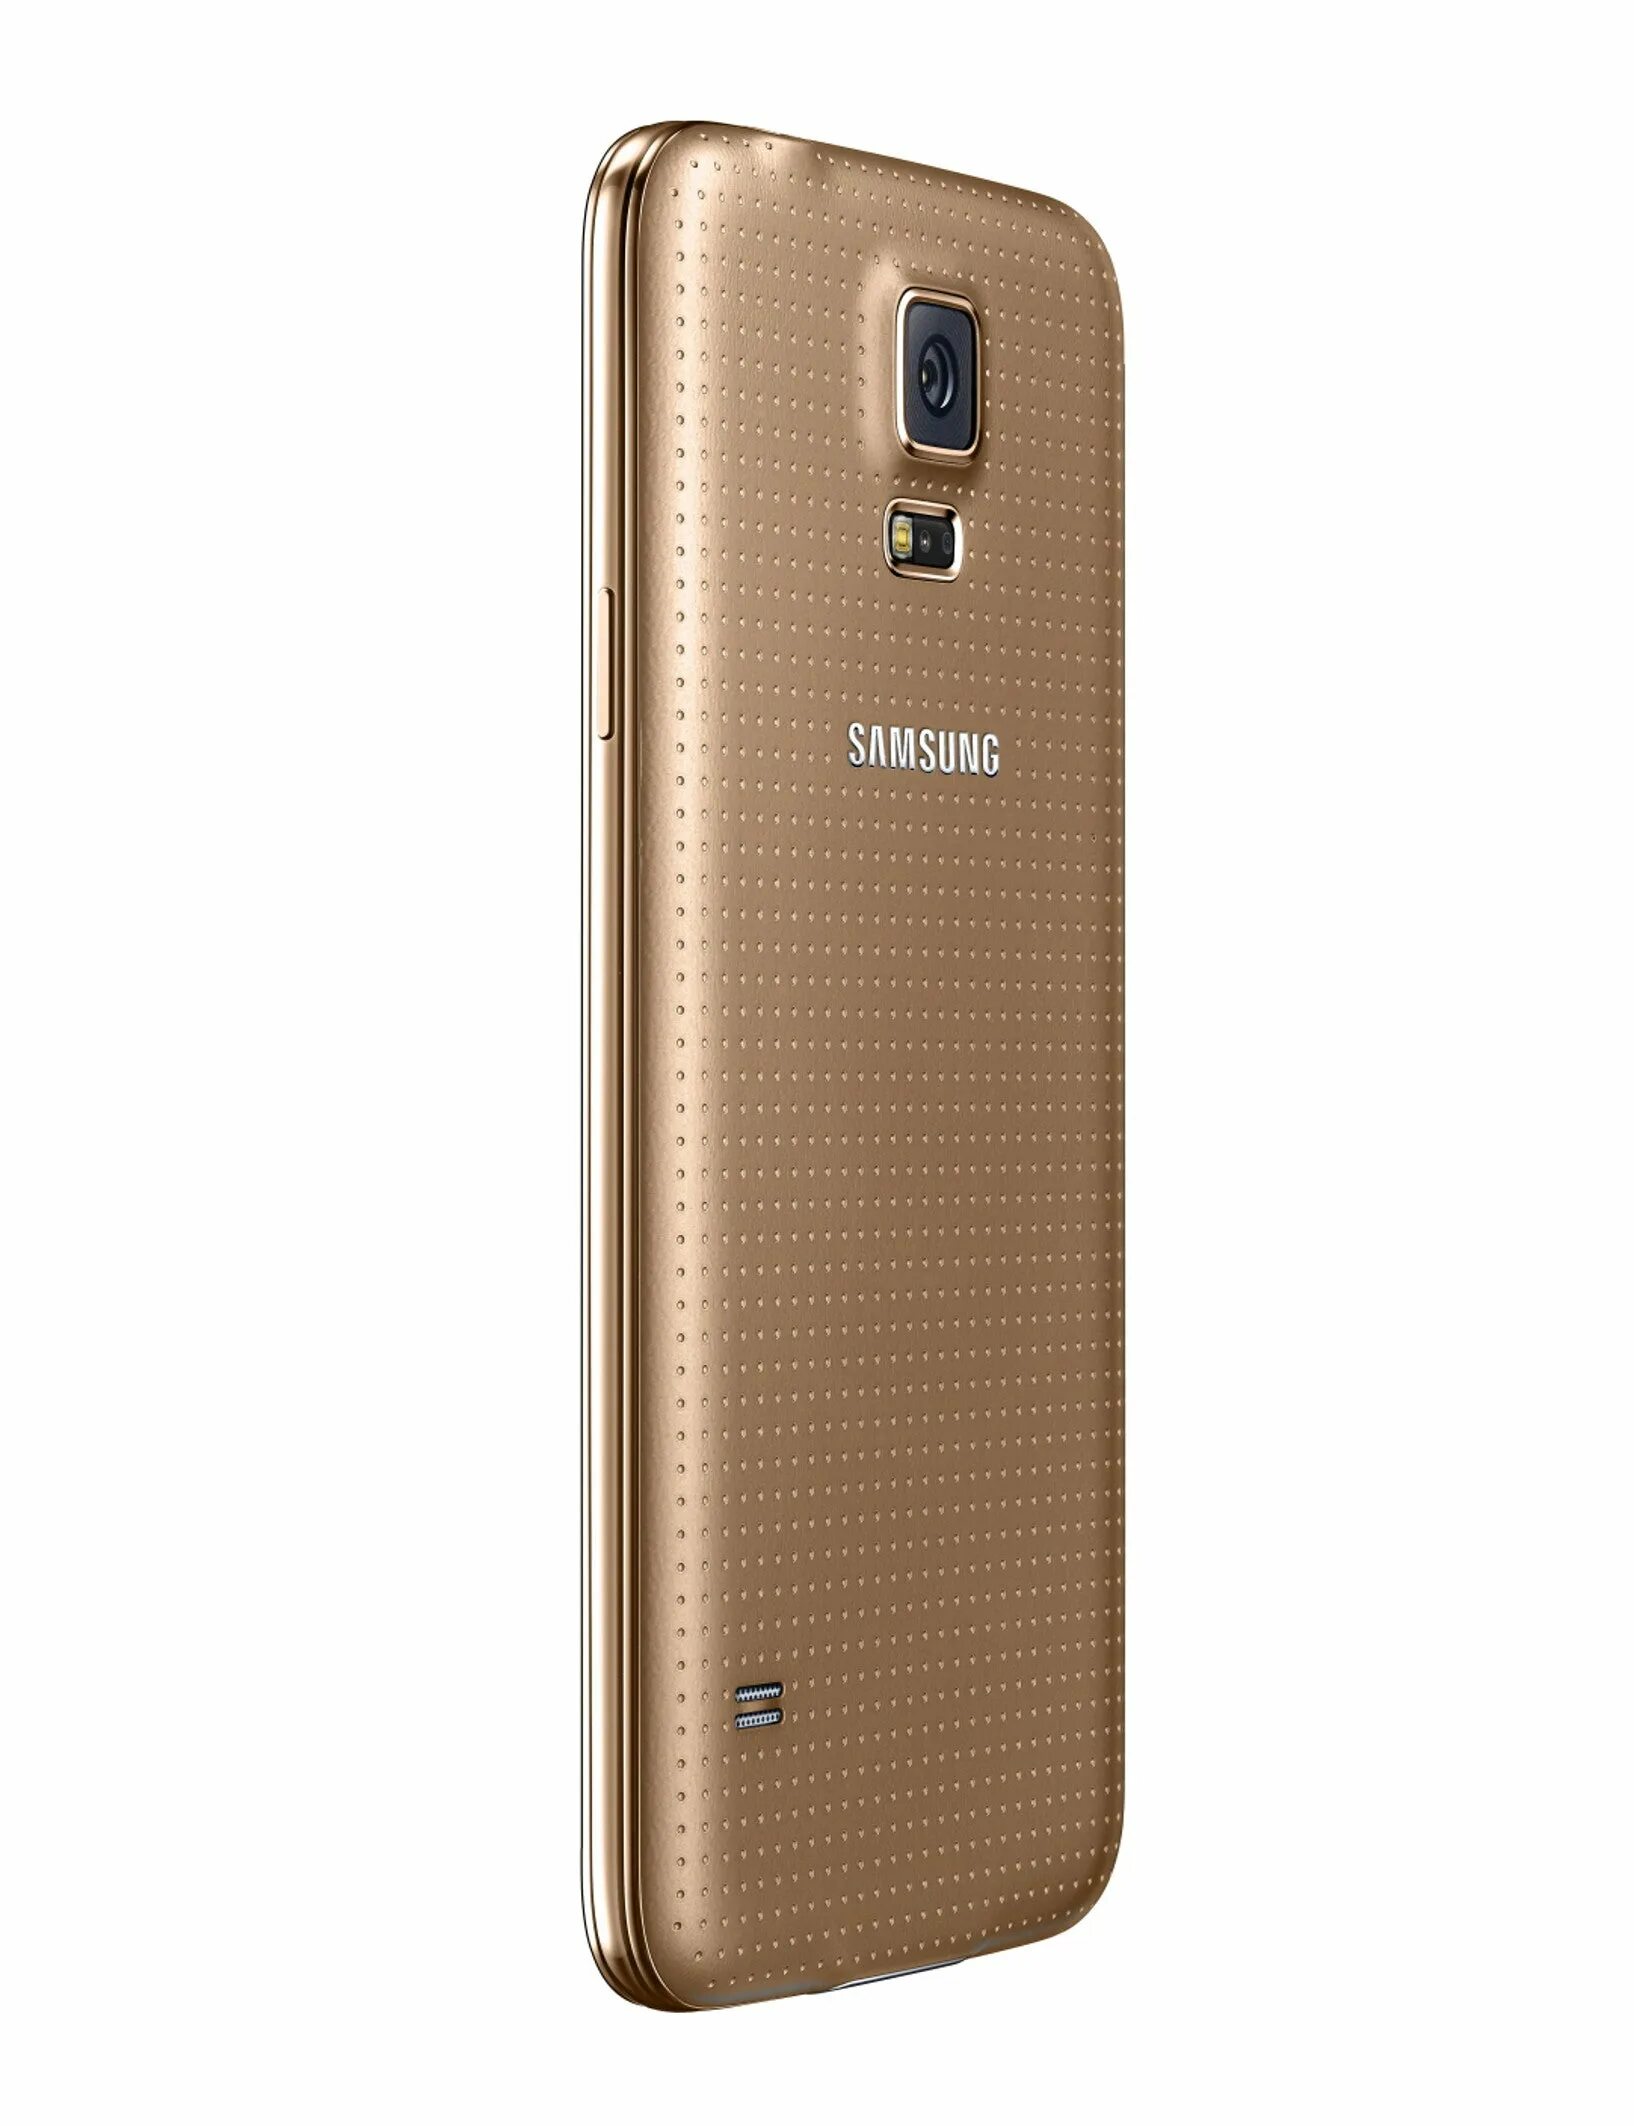 Самсунг SM g900f. Galaxy s5 SM-g900f. Samsung Galaxy s5 Duos SM-g900fd. Samsung Galaxy s5 Gold.